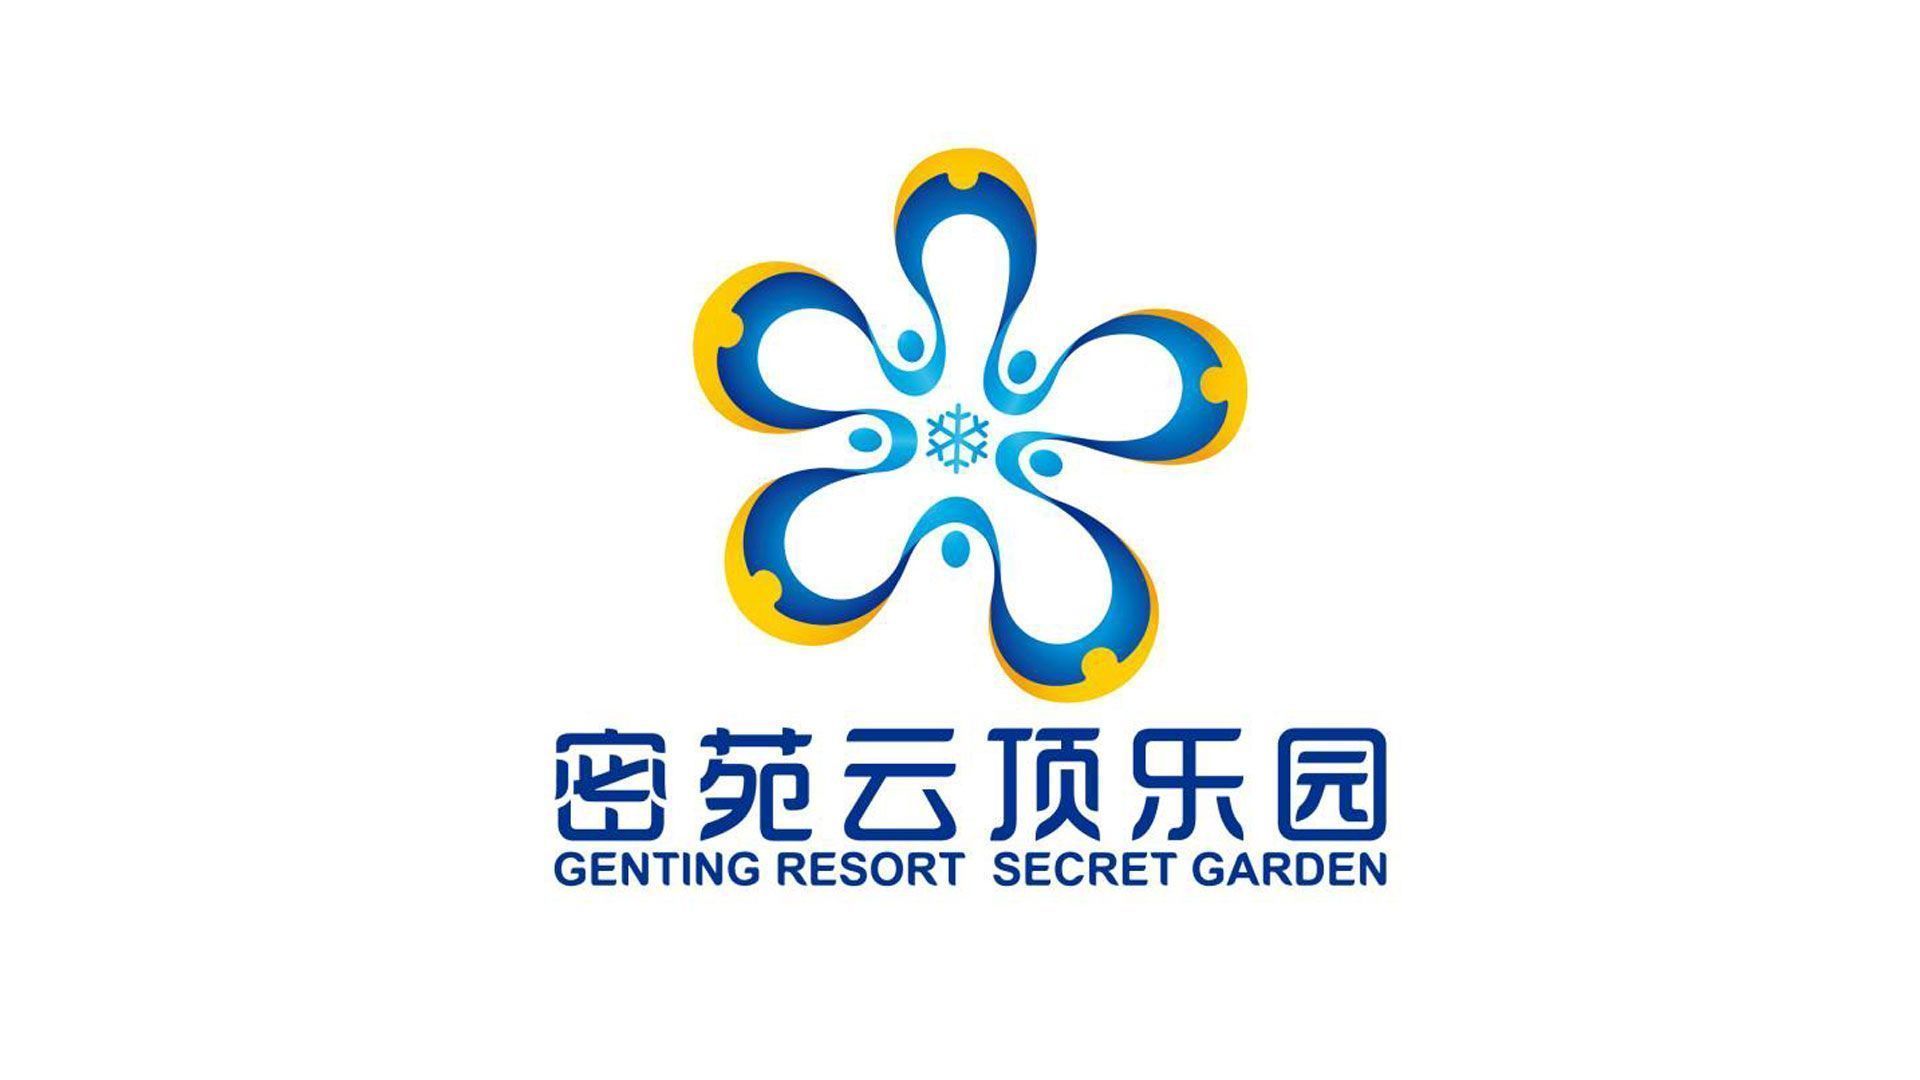 Genting Resort Secret Garden logo